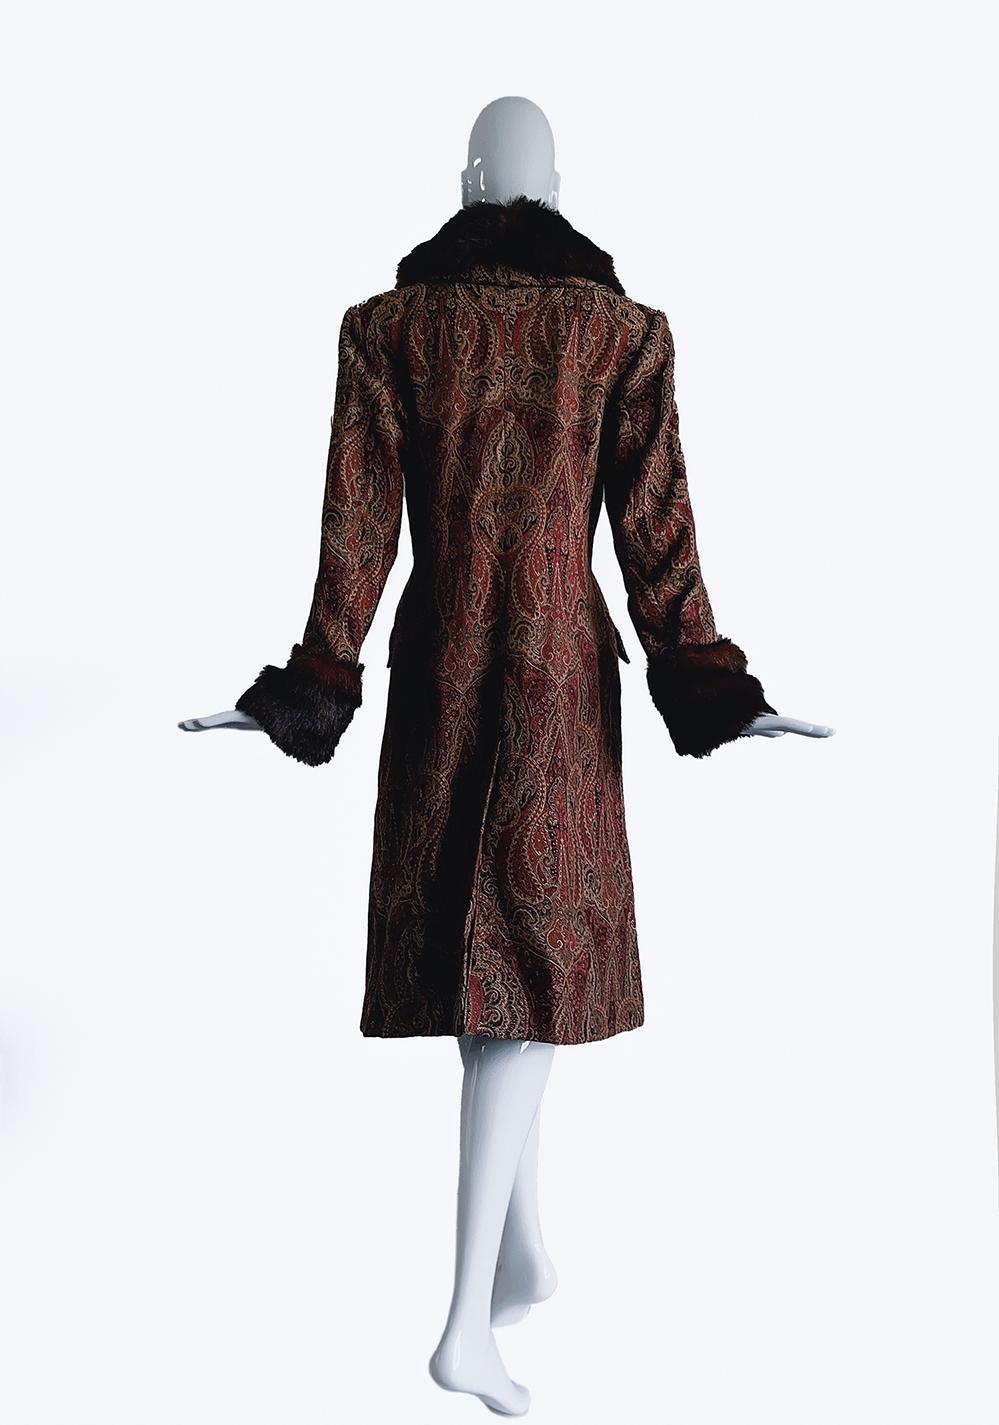 Fabulous 1970s Coat  70s 60s Faux Fur Brocade Luxury Vintage Jacket Penny Lane For Sale 2